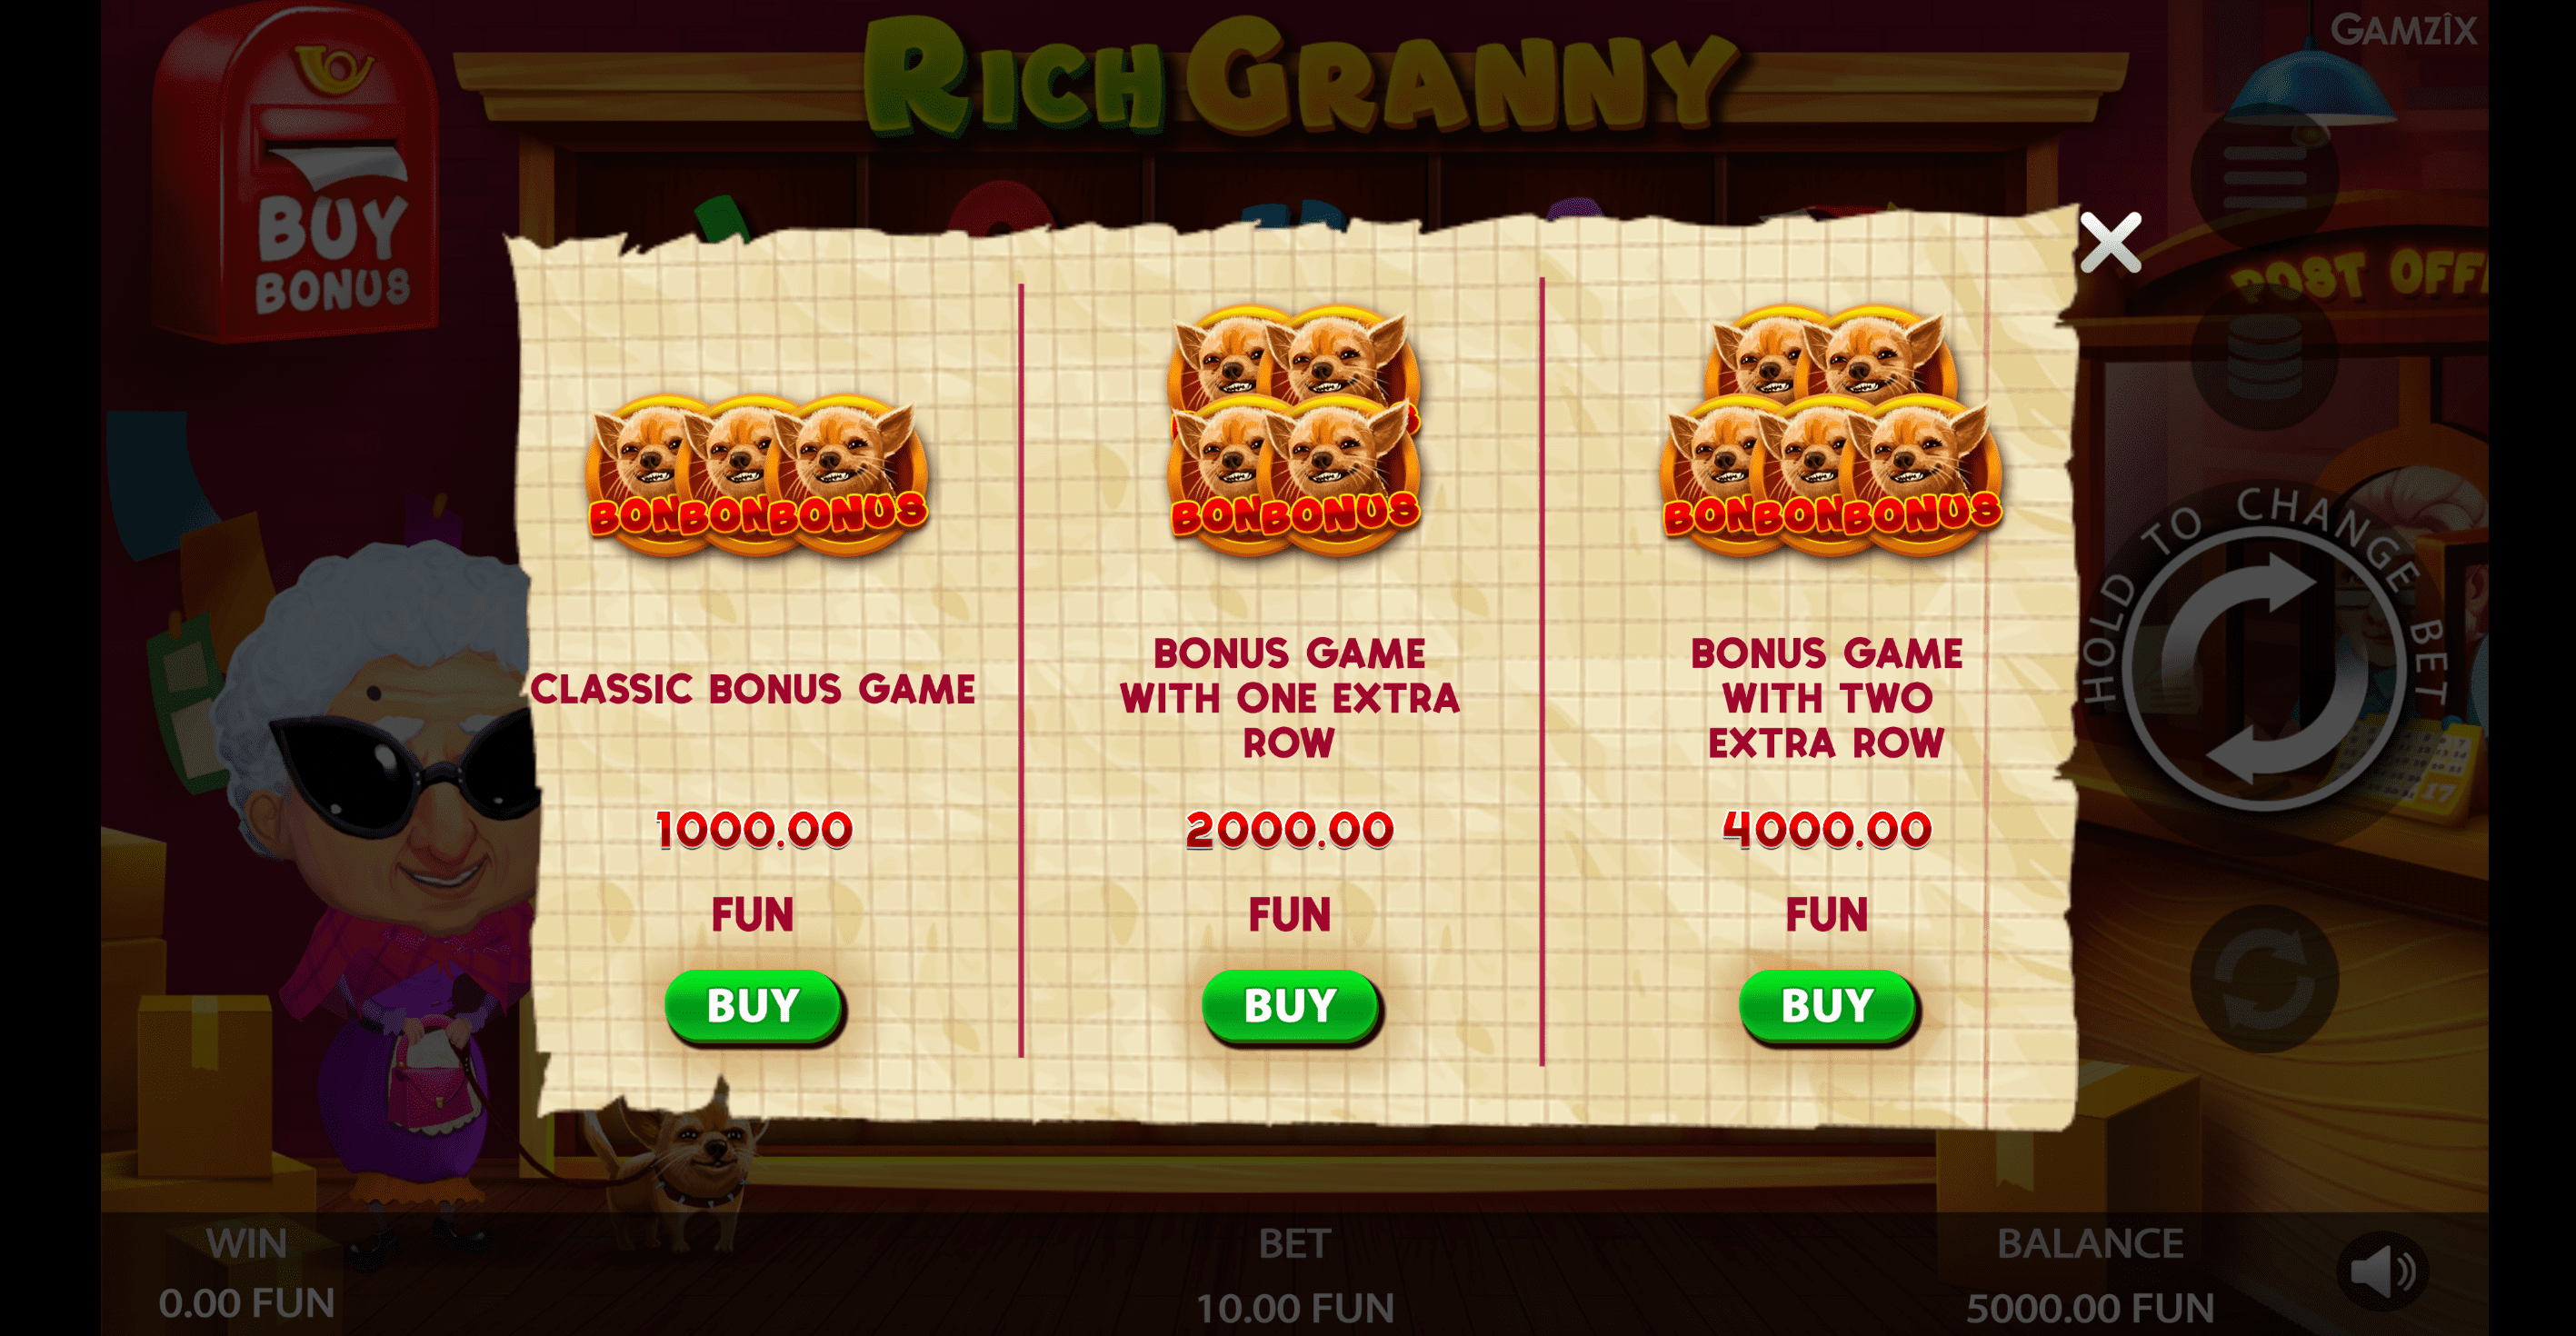 Rich Granny عملية اللعبة